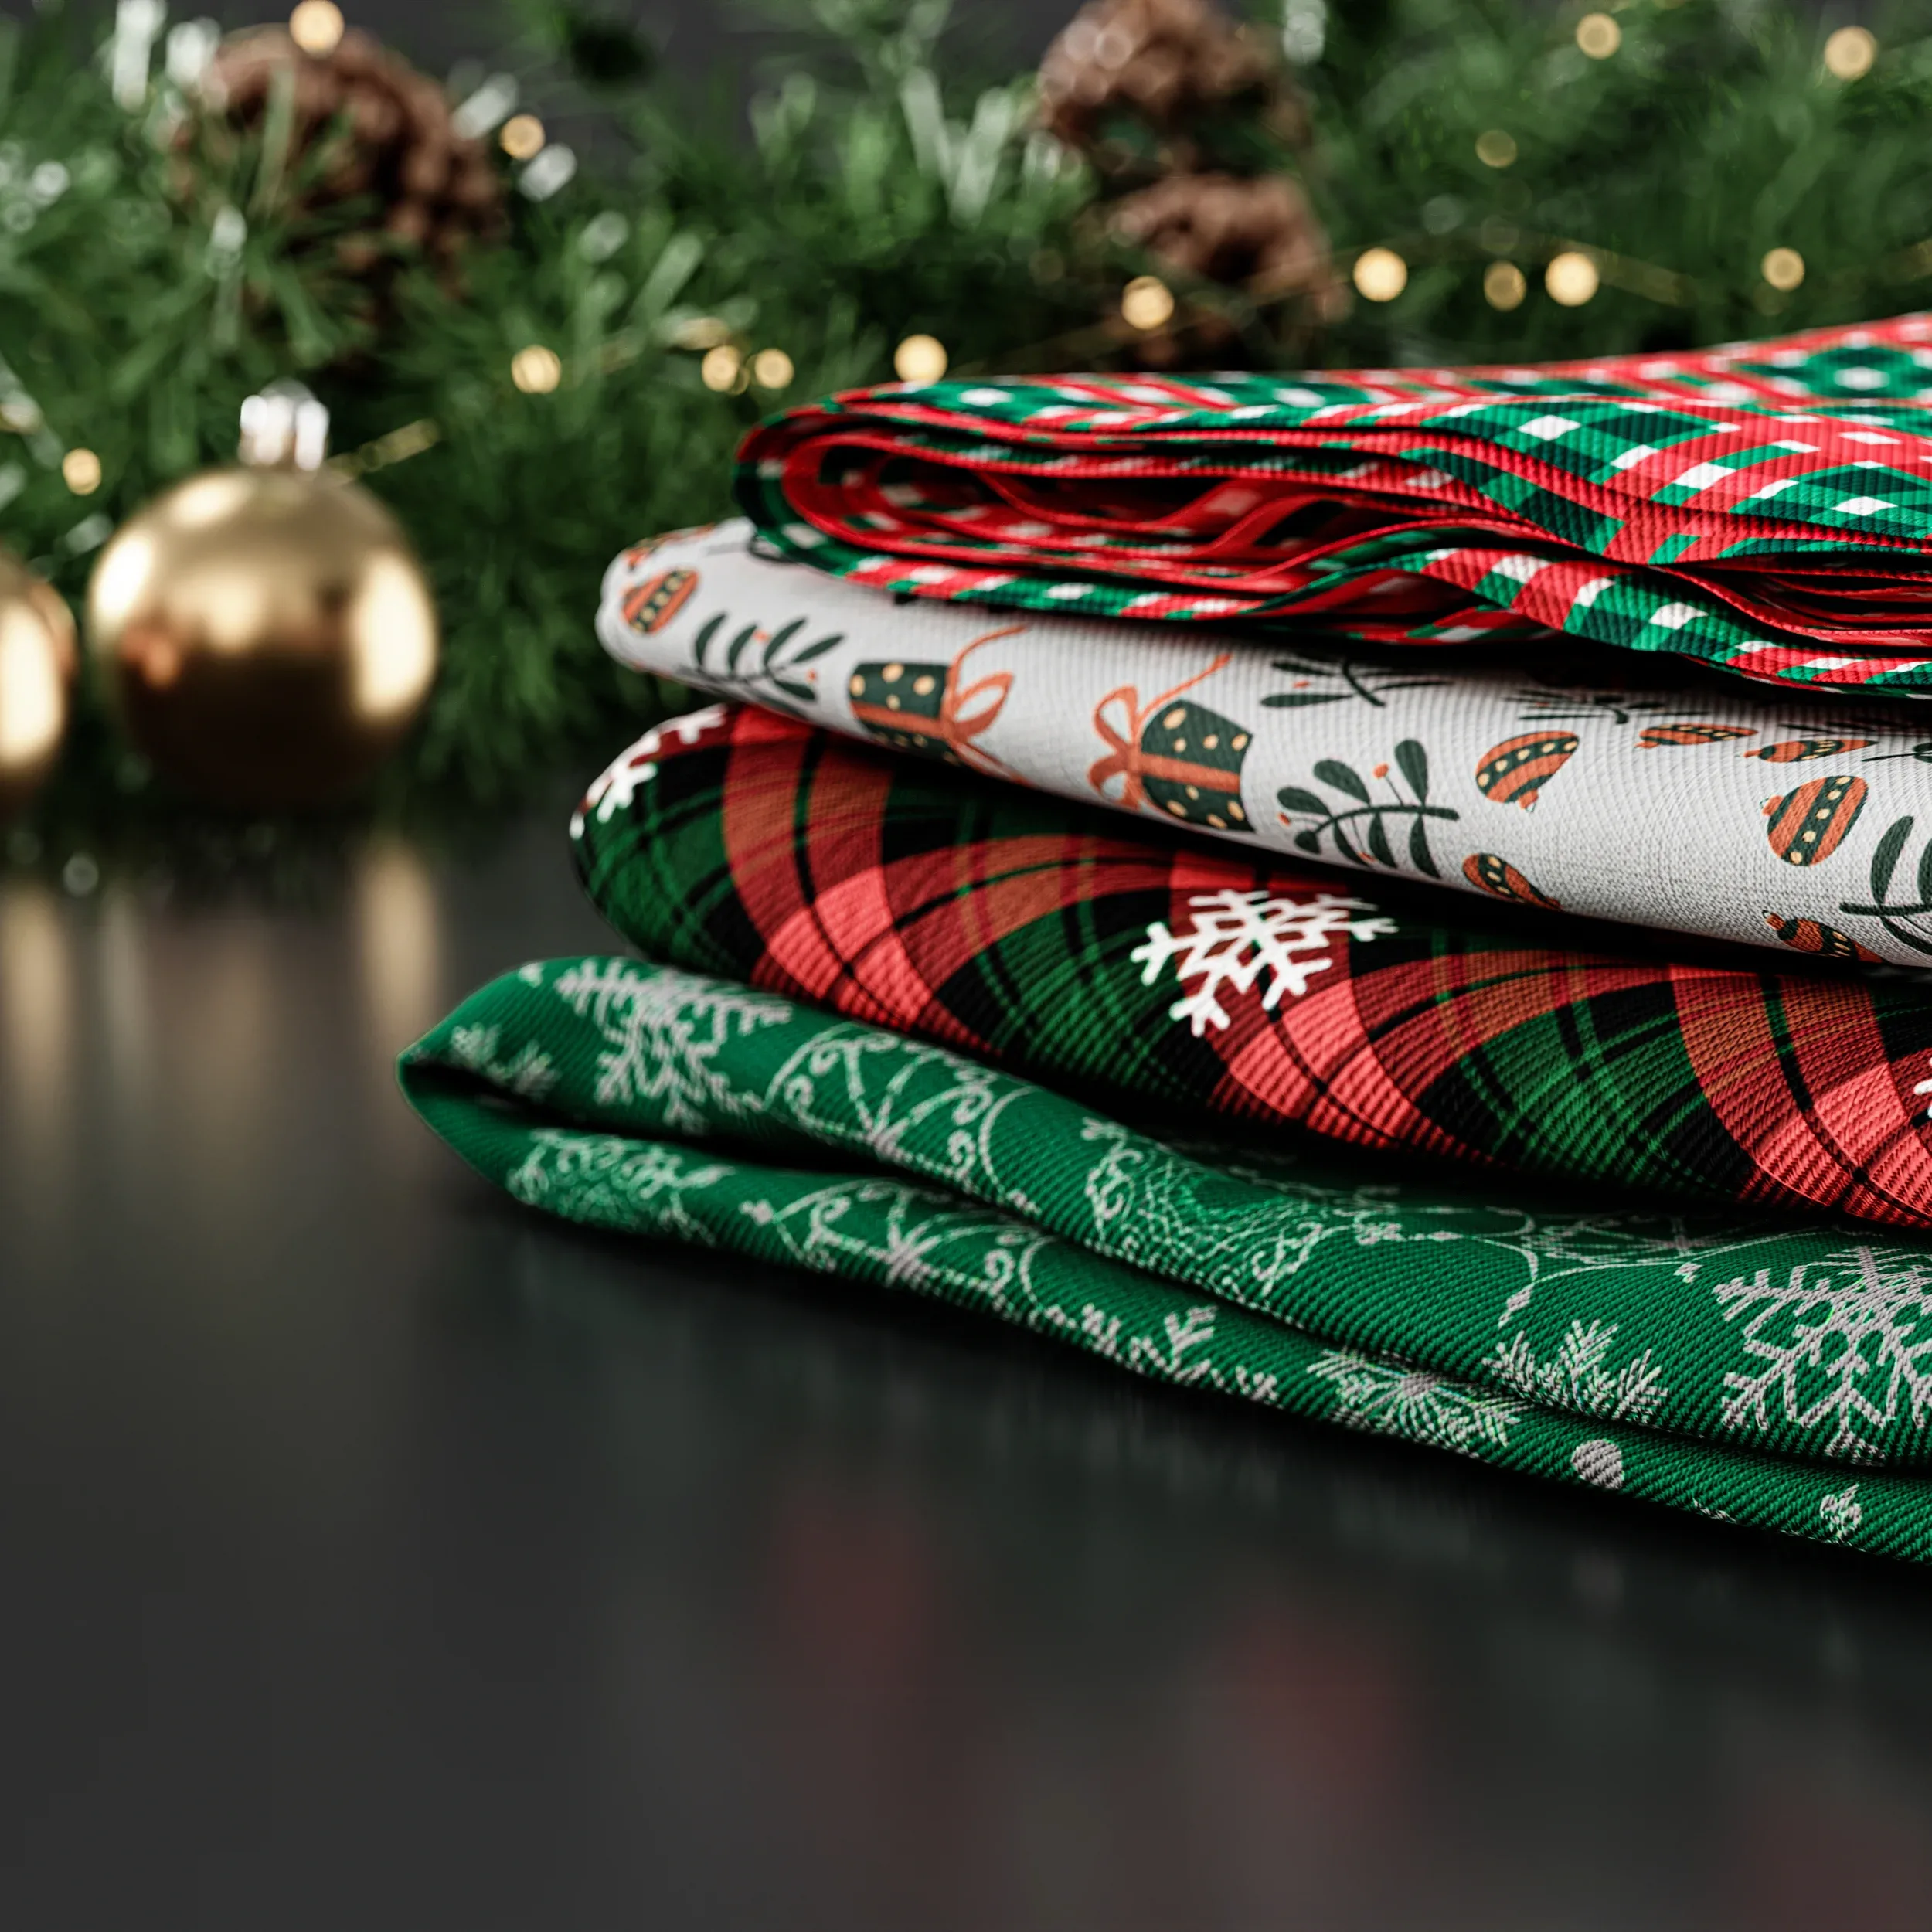 70 Christmas-Winter Fabric Material_Sbsar Vol.14